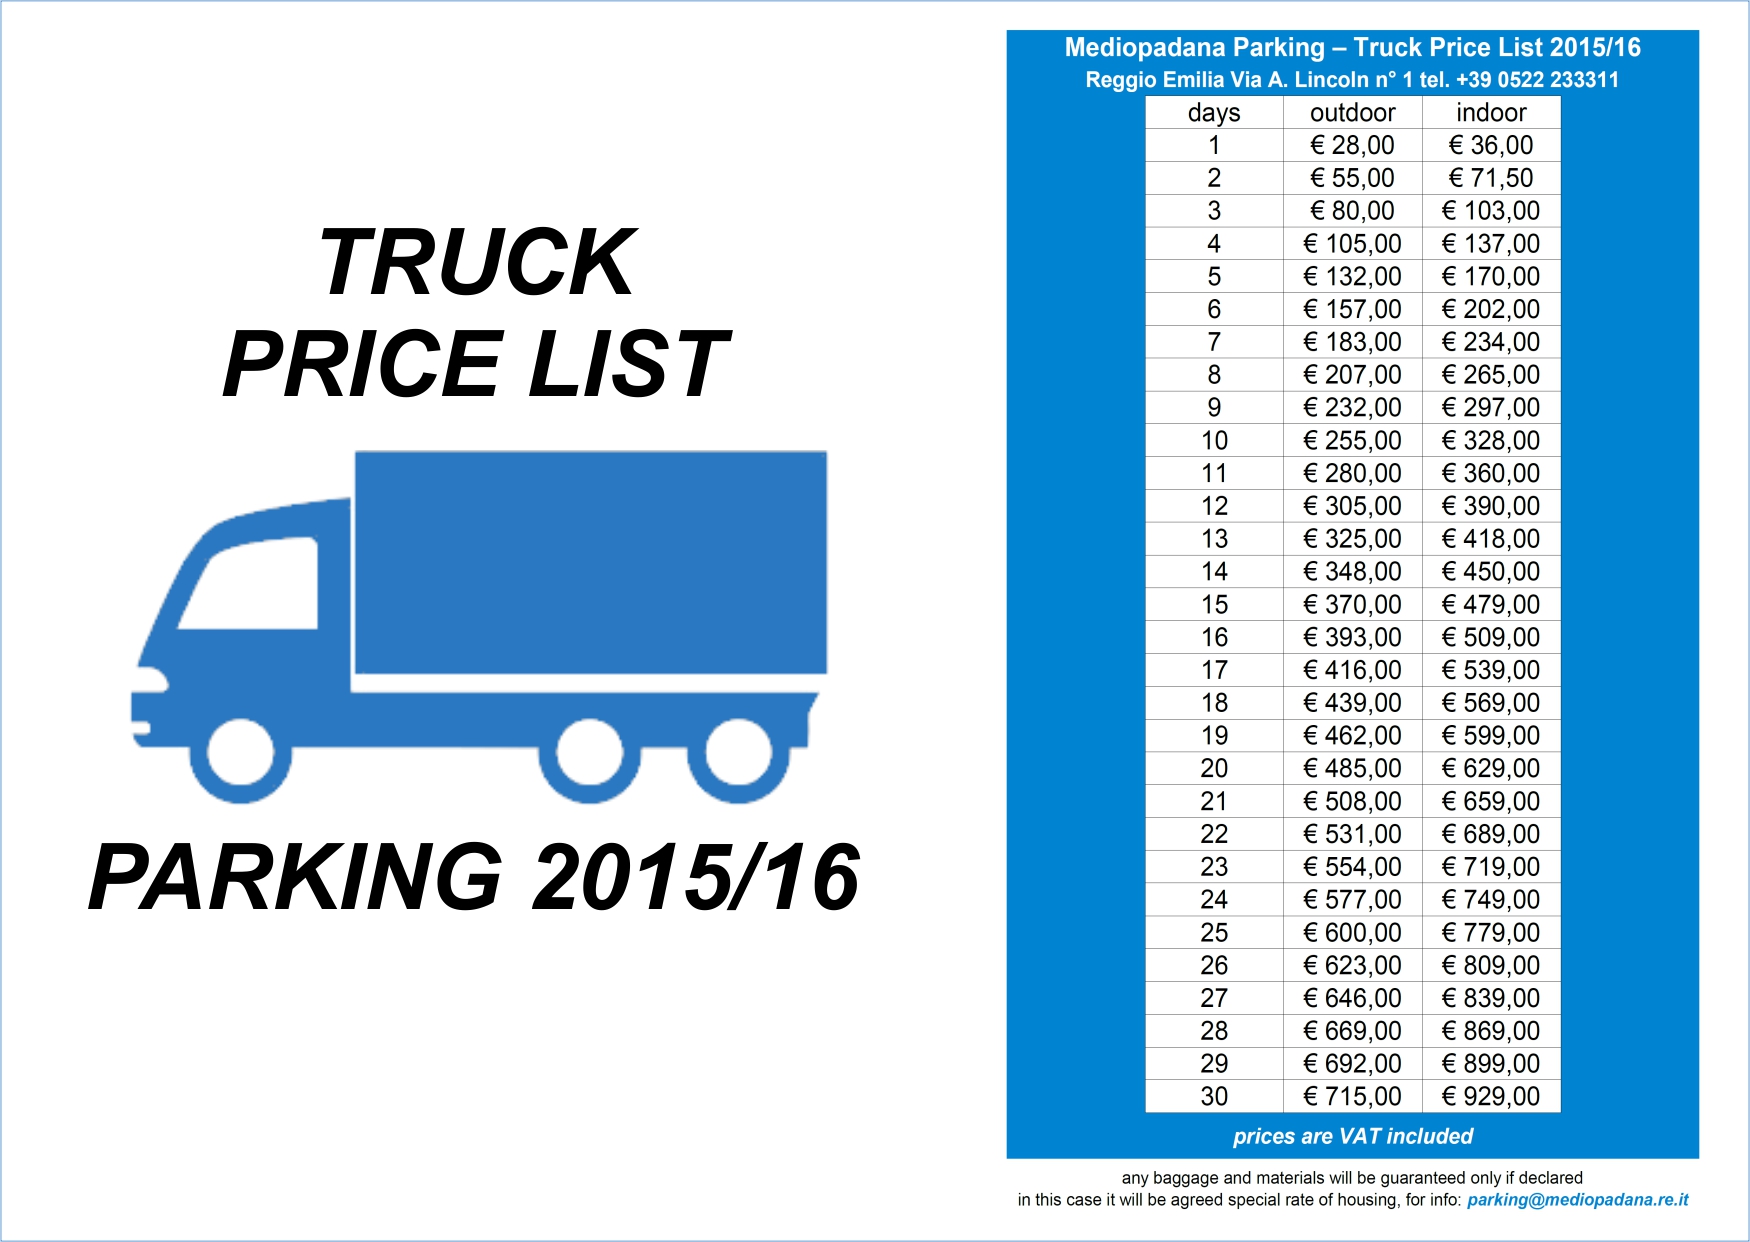 Mediopadana Parking - Price List 2015/16